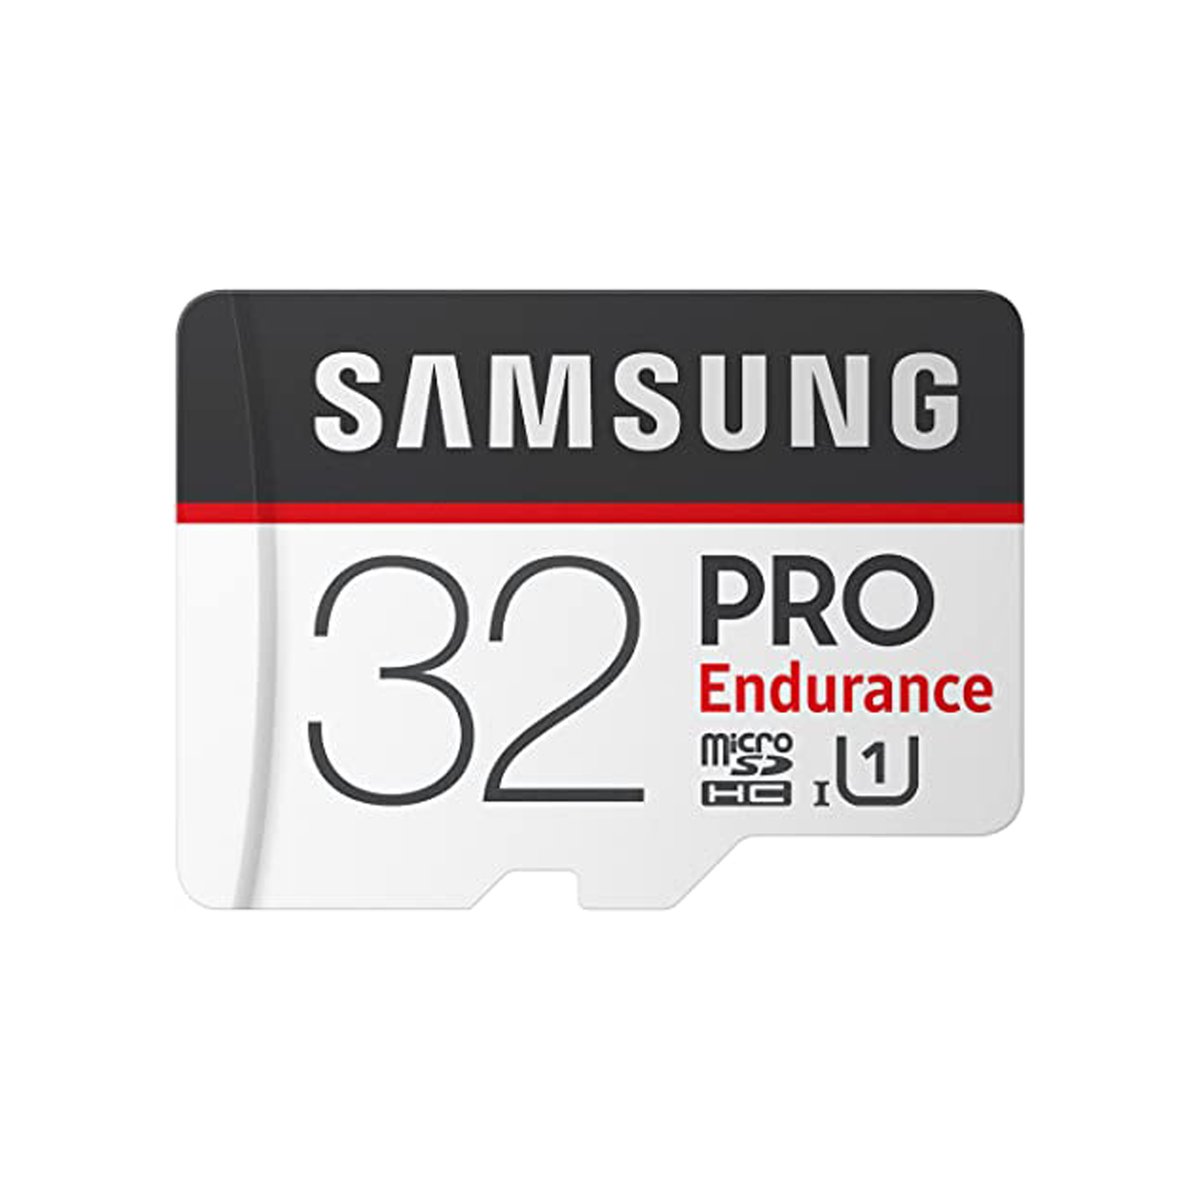 Sam Micro SD Card Pro Endurance 32GB MJ32GA